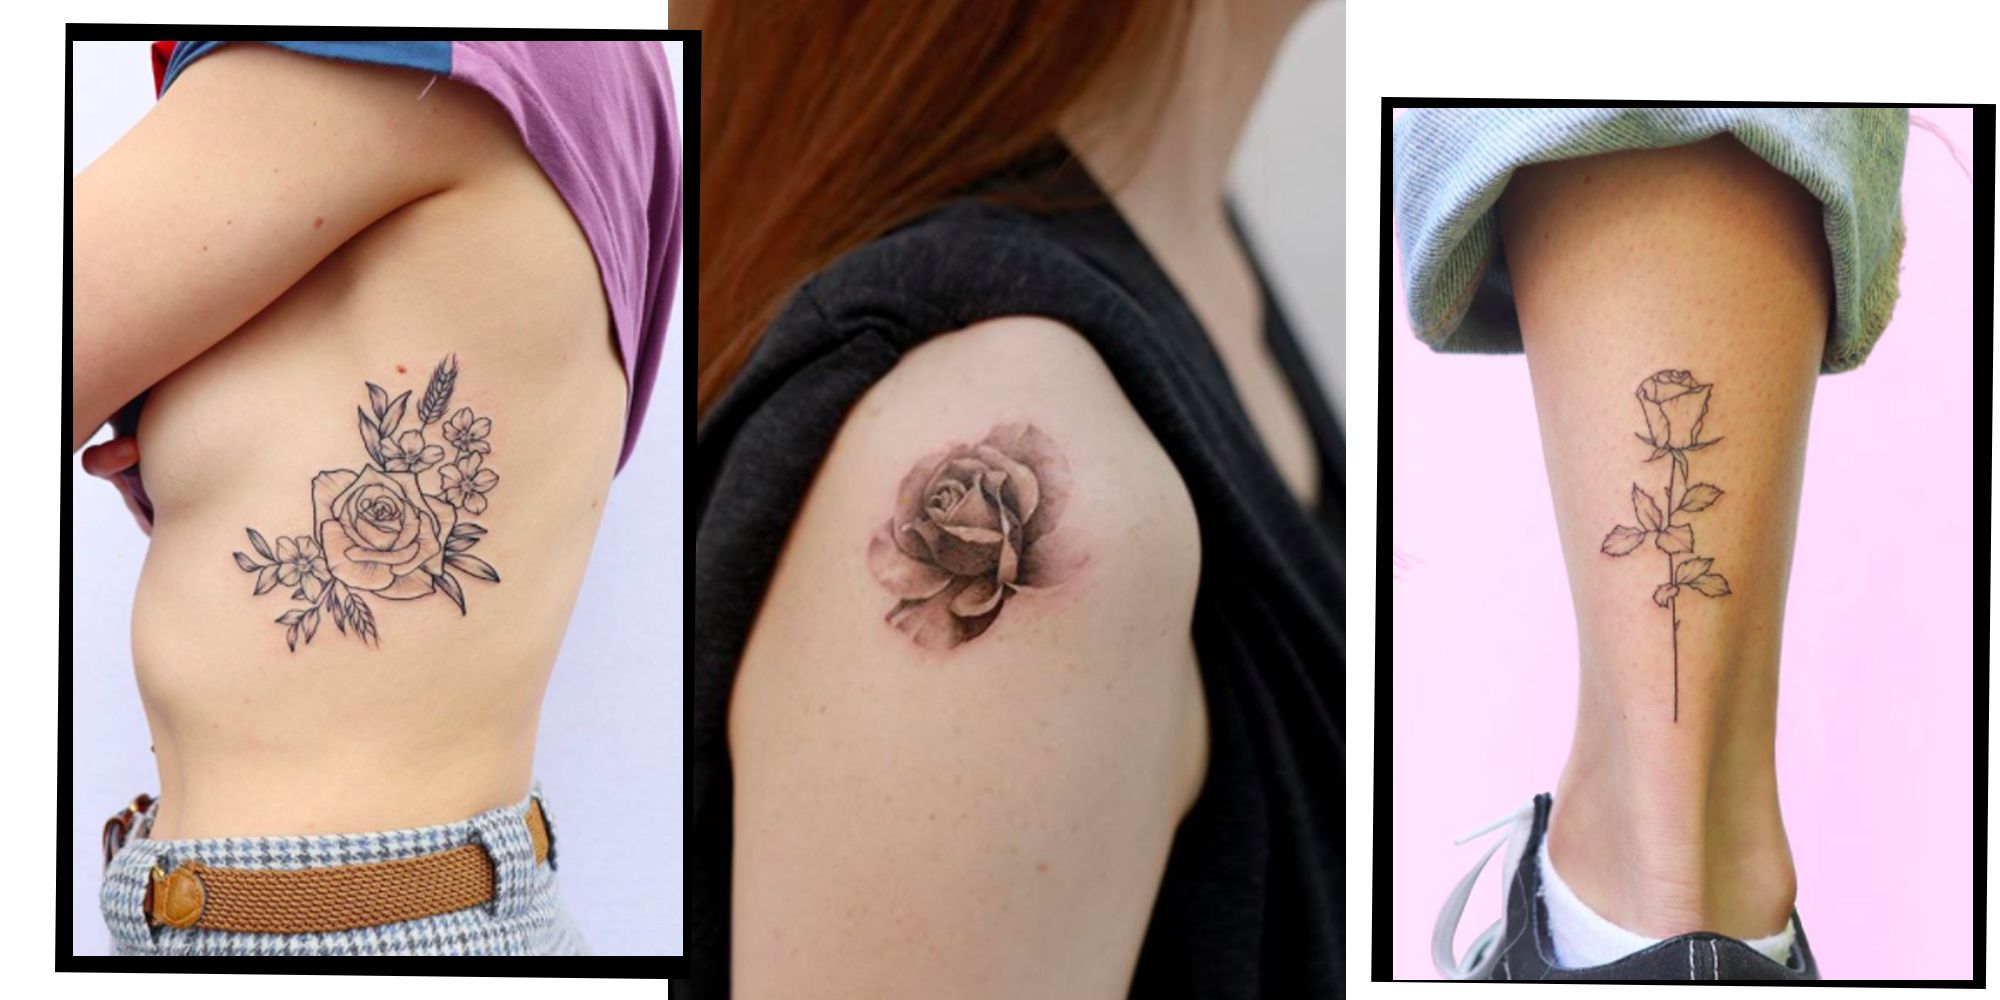 17 Rose Tattoo Designs for Women - Mom's Got the Stuff